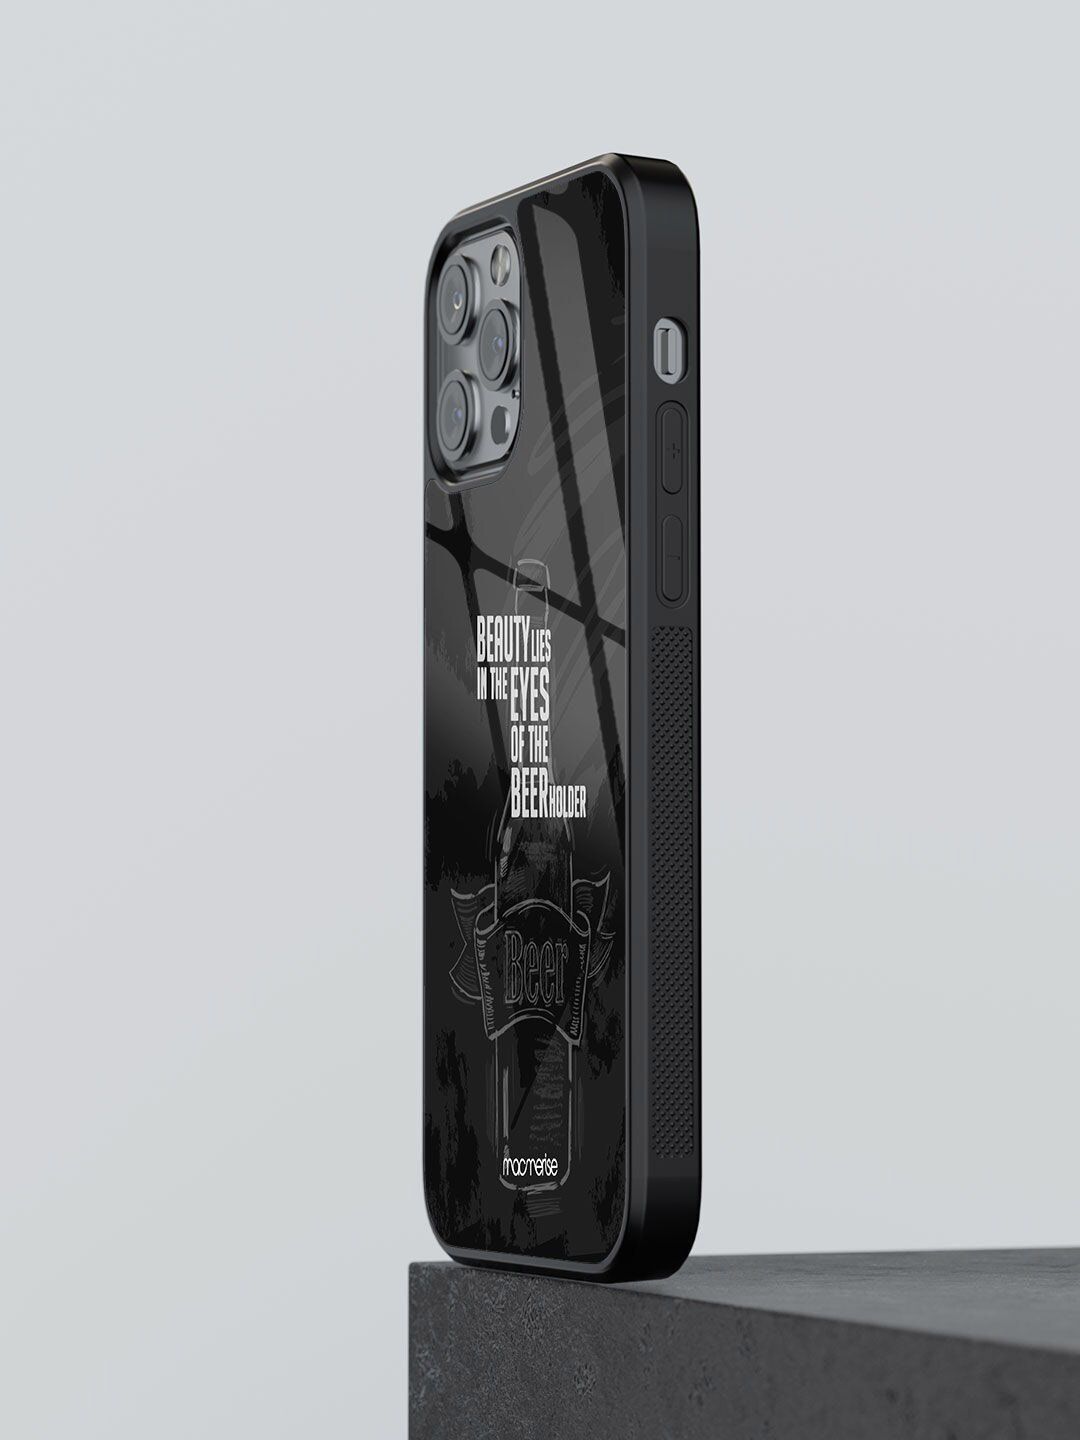 macmerise Black Printed Beer Holder iPhone 13 Pro Back Case Price in India